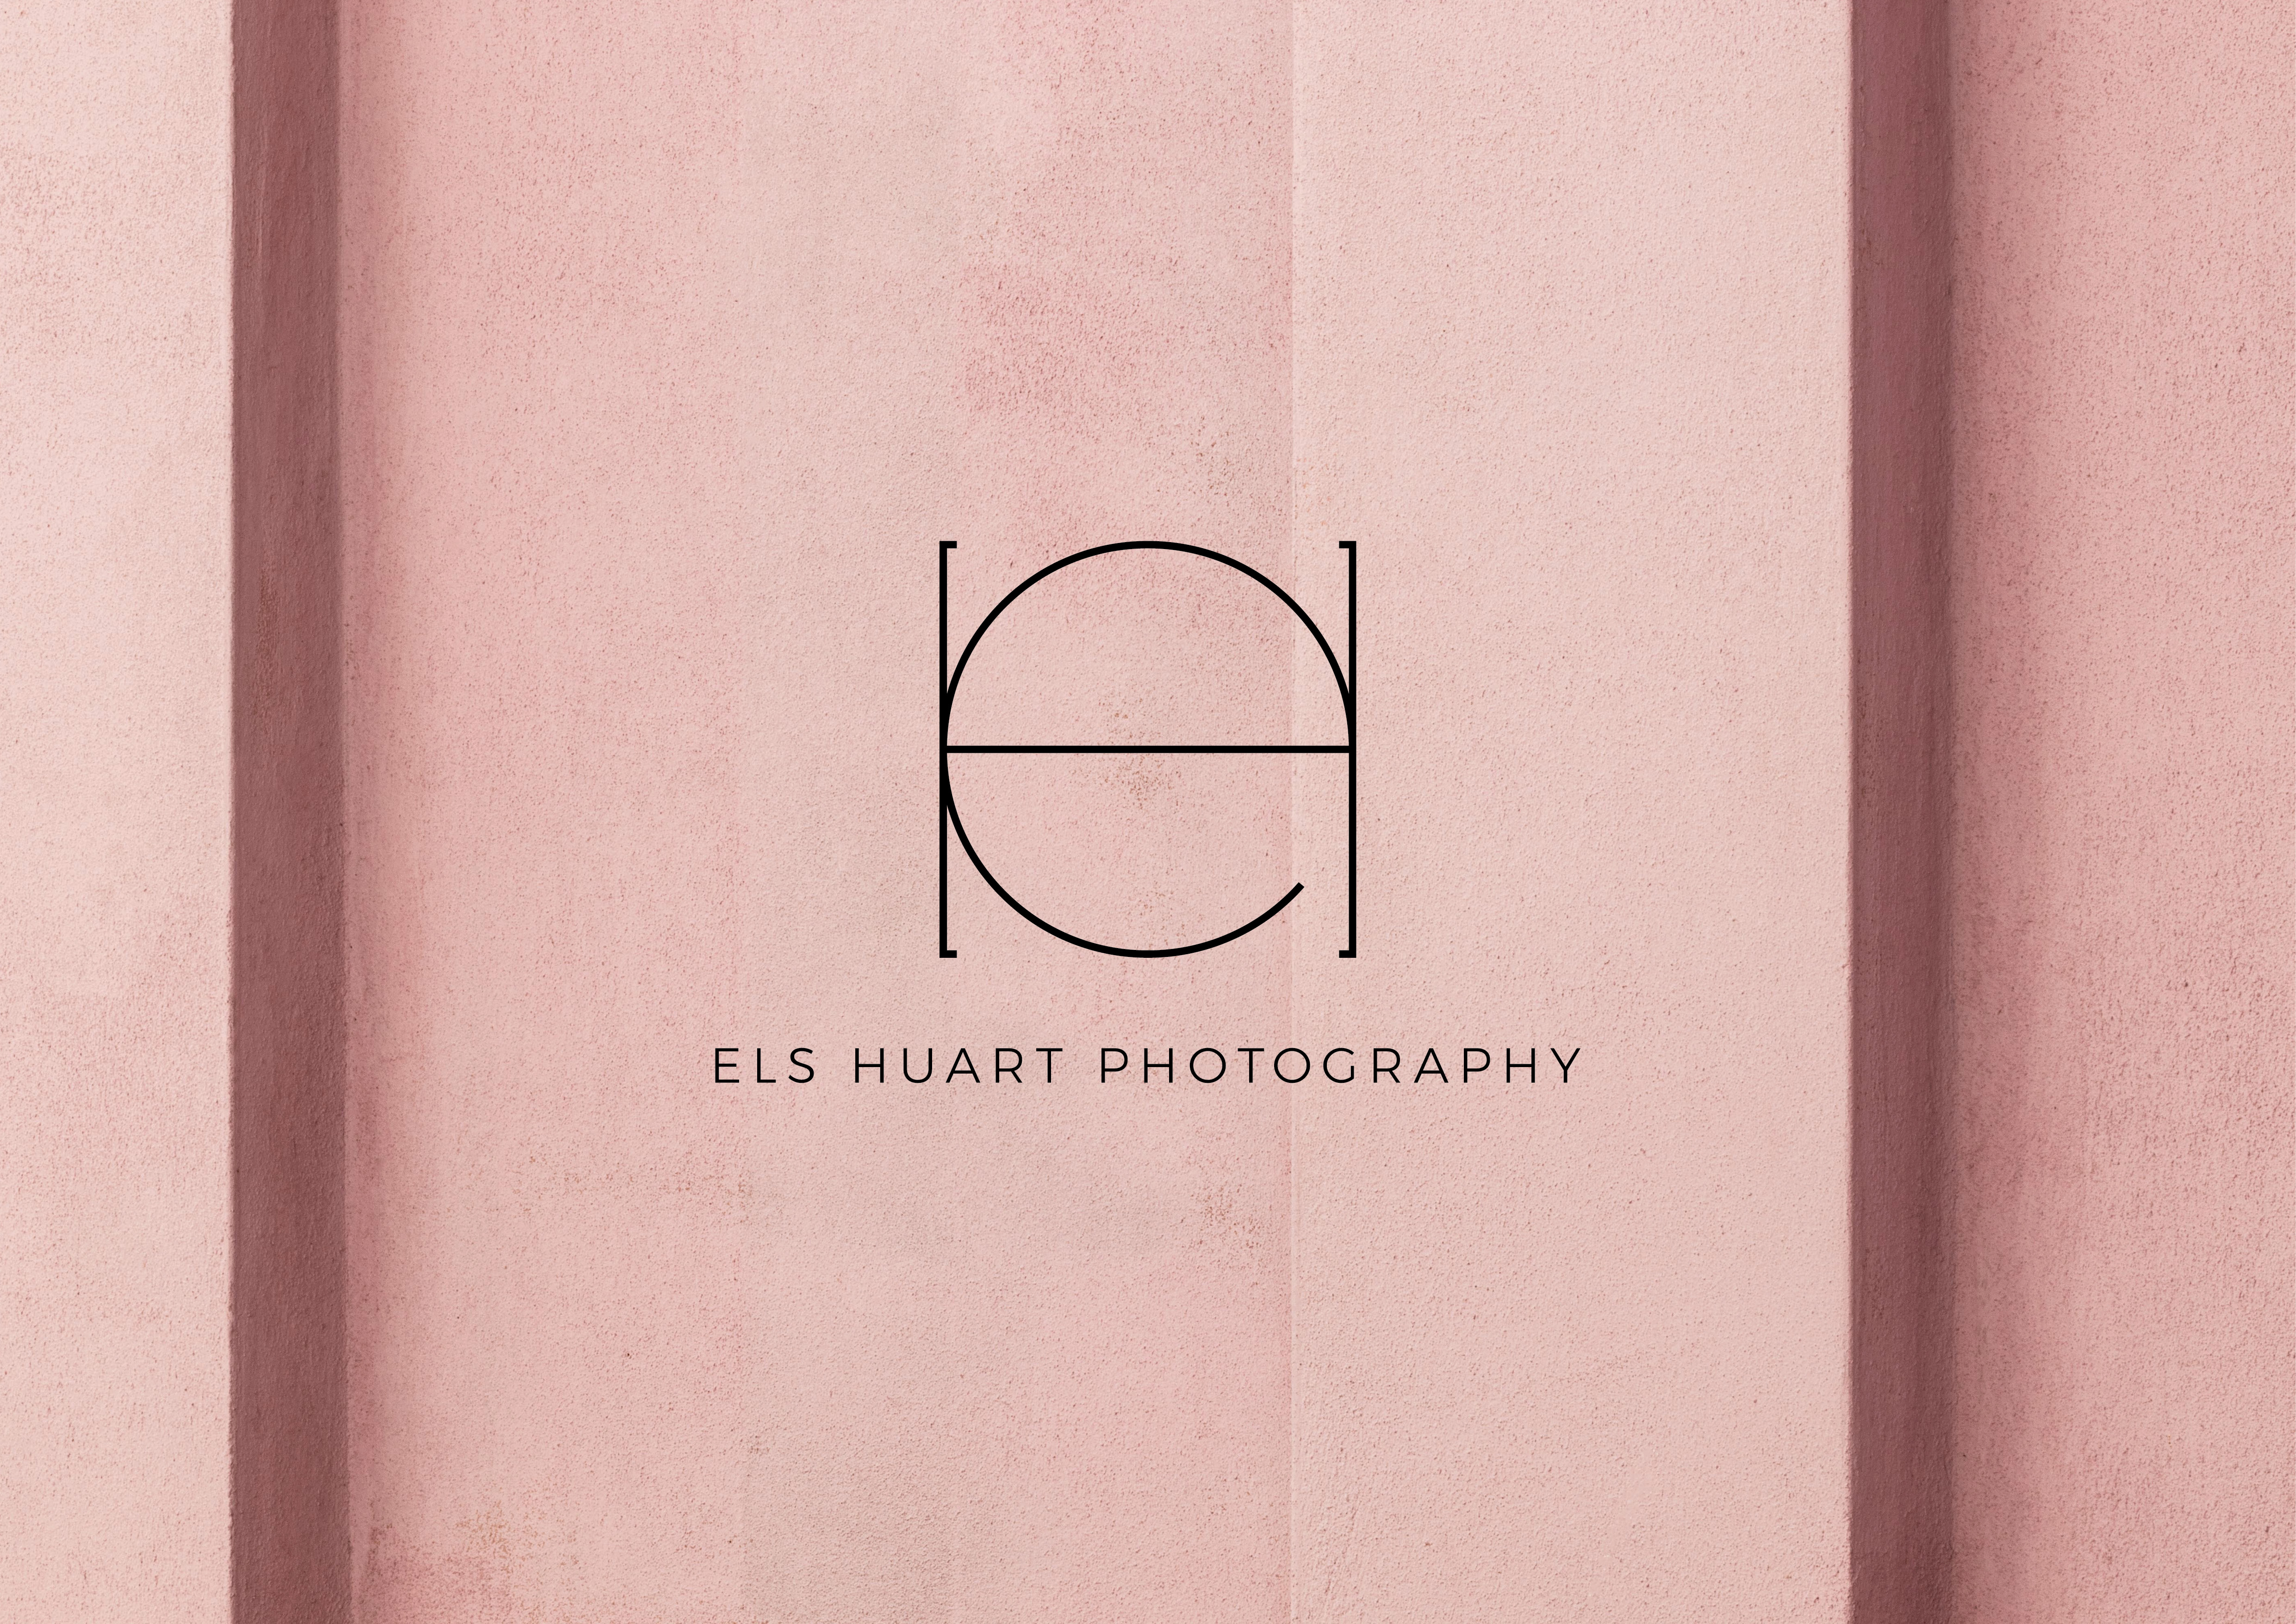 Els Huart photography logo - branding